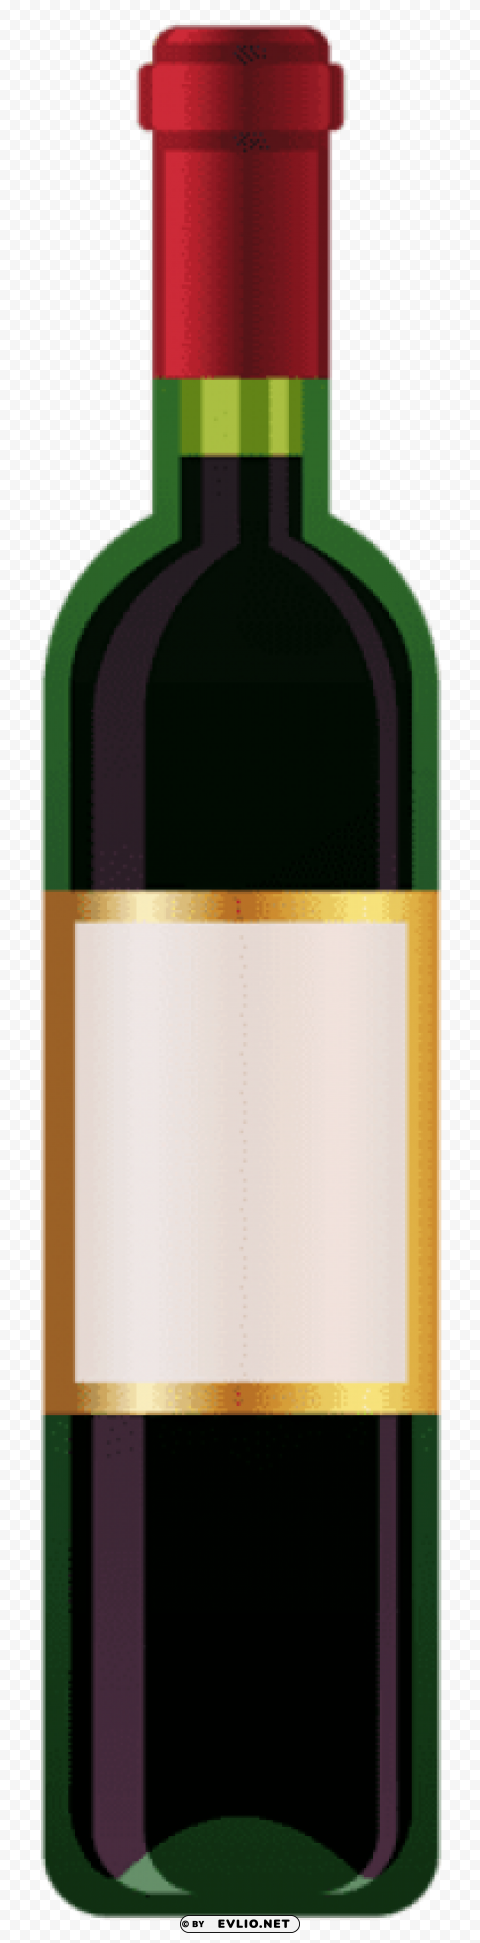 bottle of red wine vector Transparent PNG download